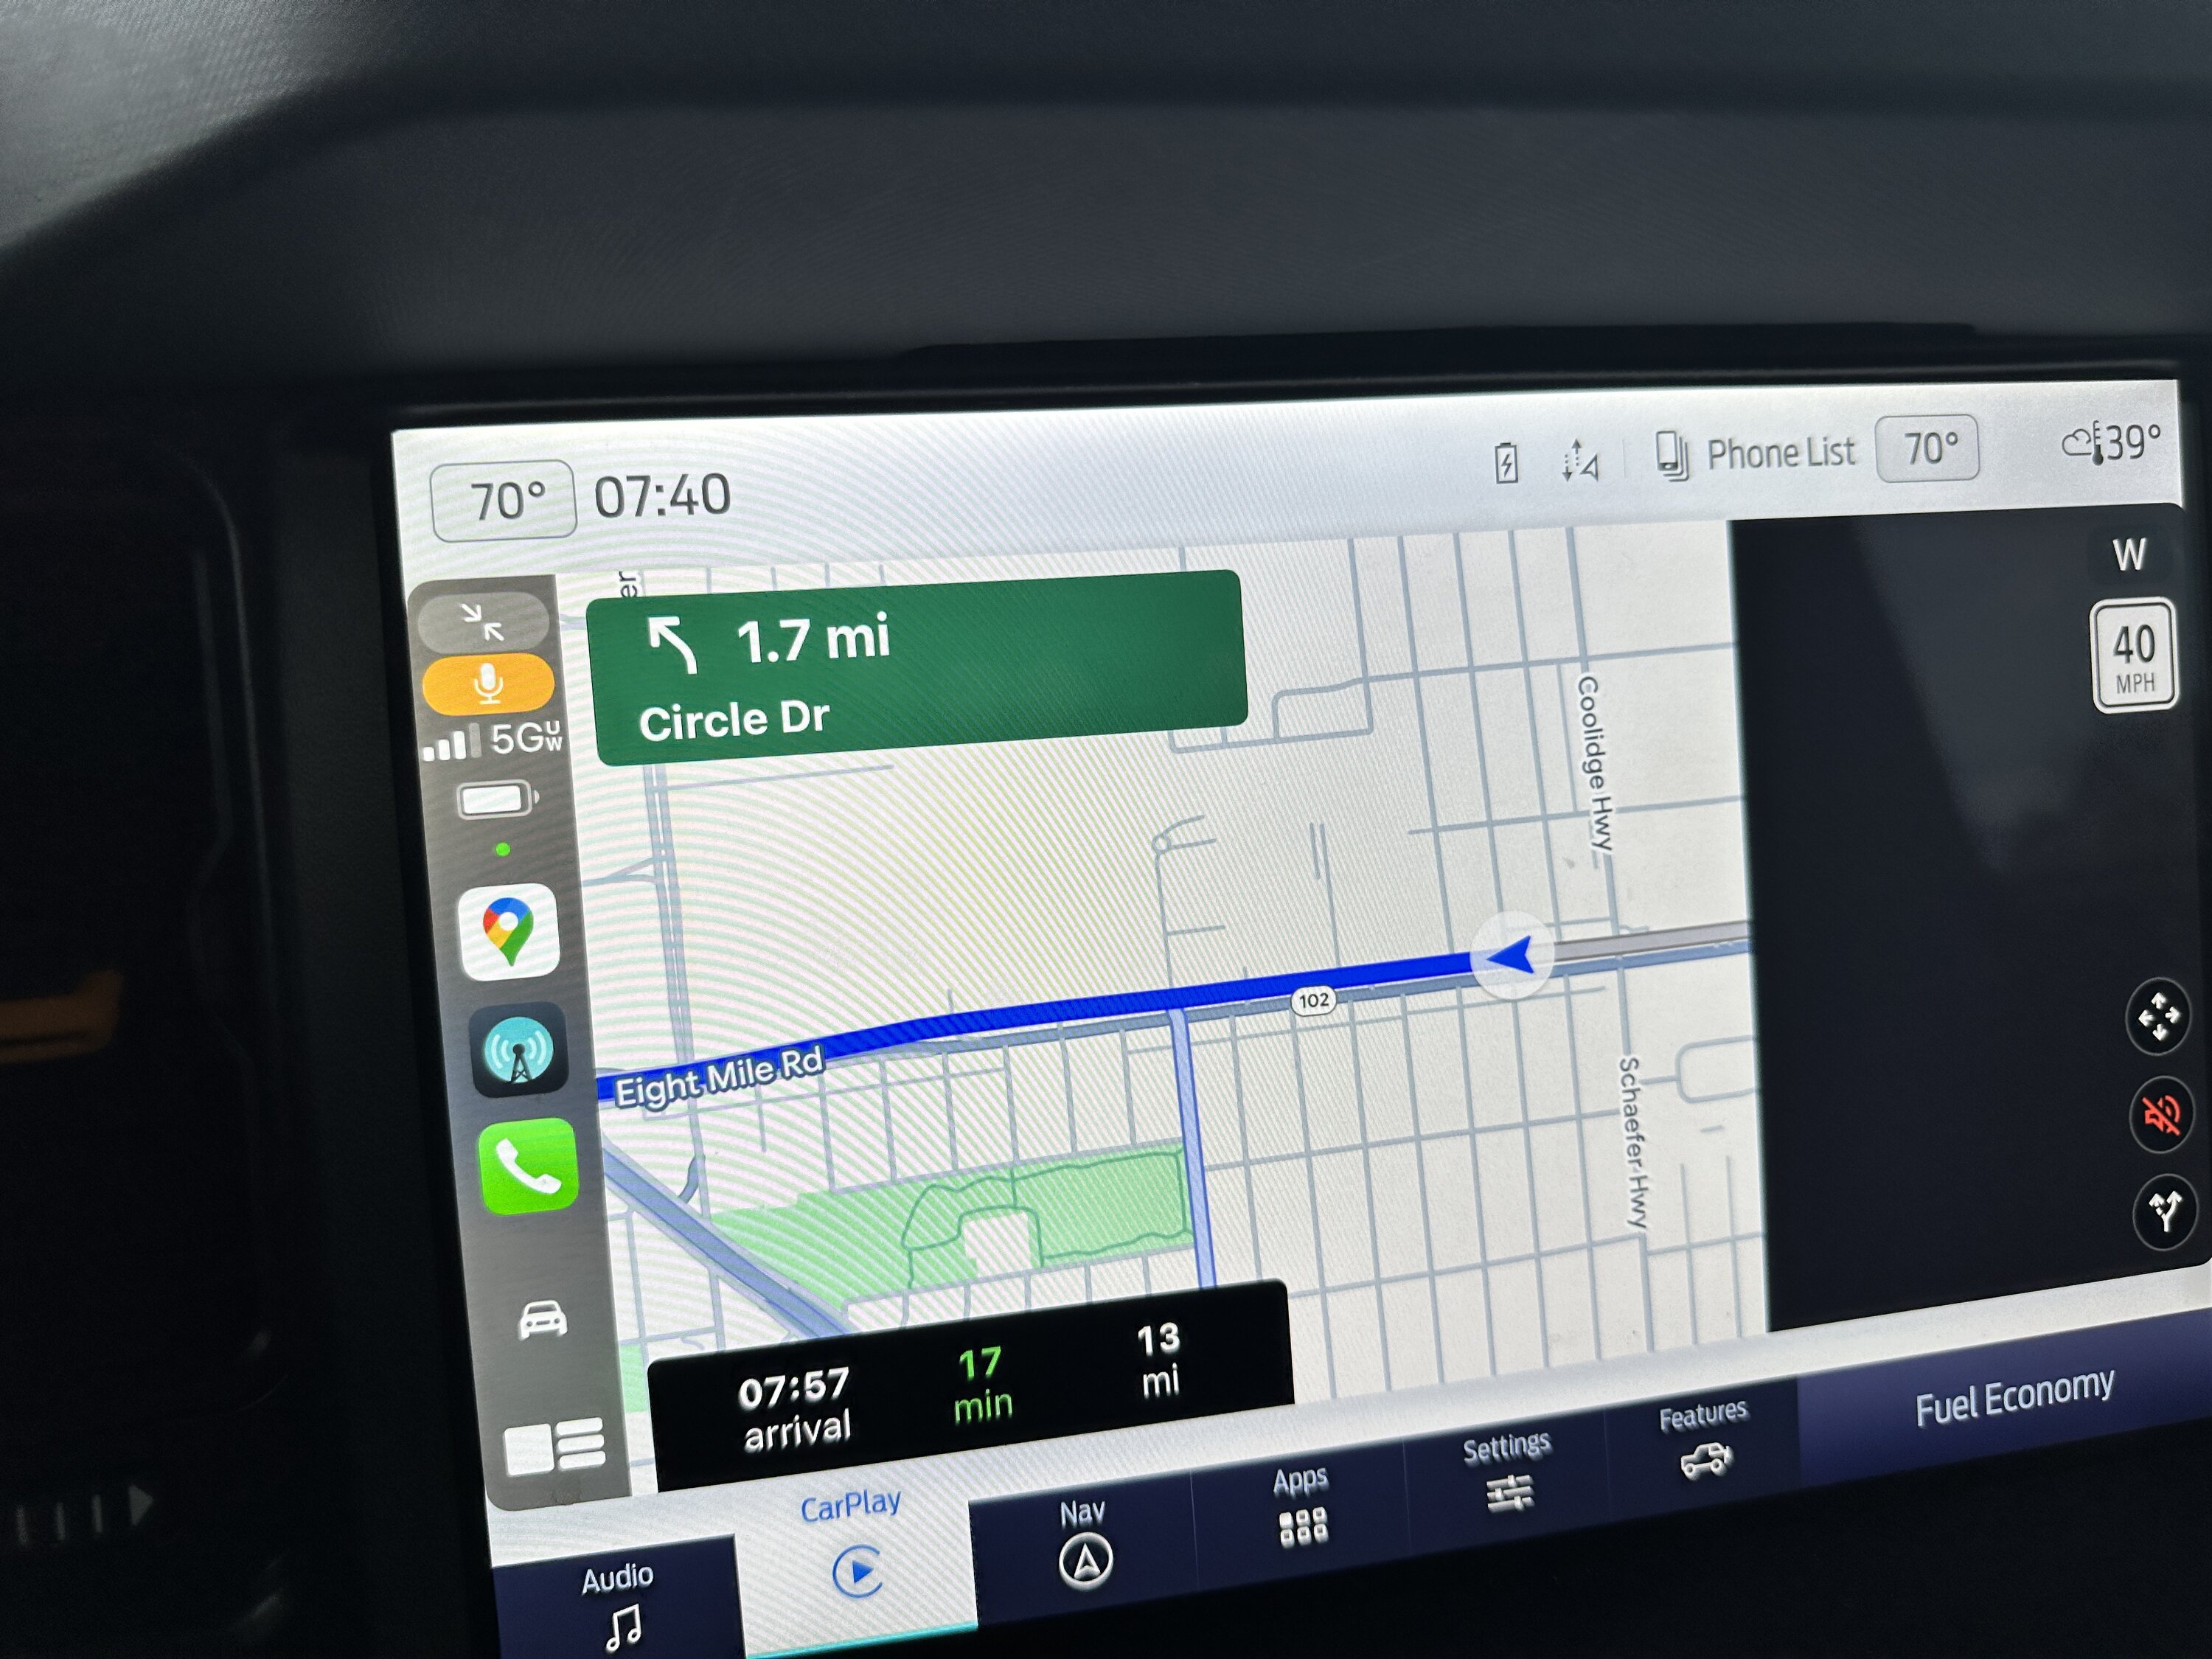 Ford Bronco CarPlay google maps gets stuck in 2/3 screen: IMG_5010